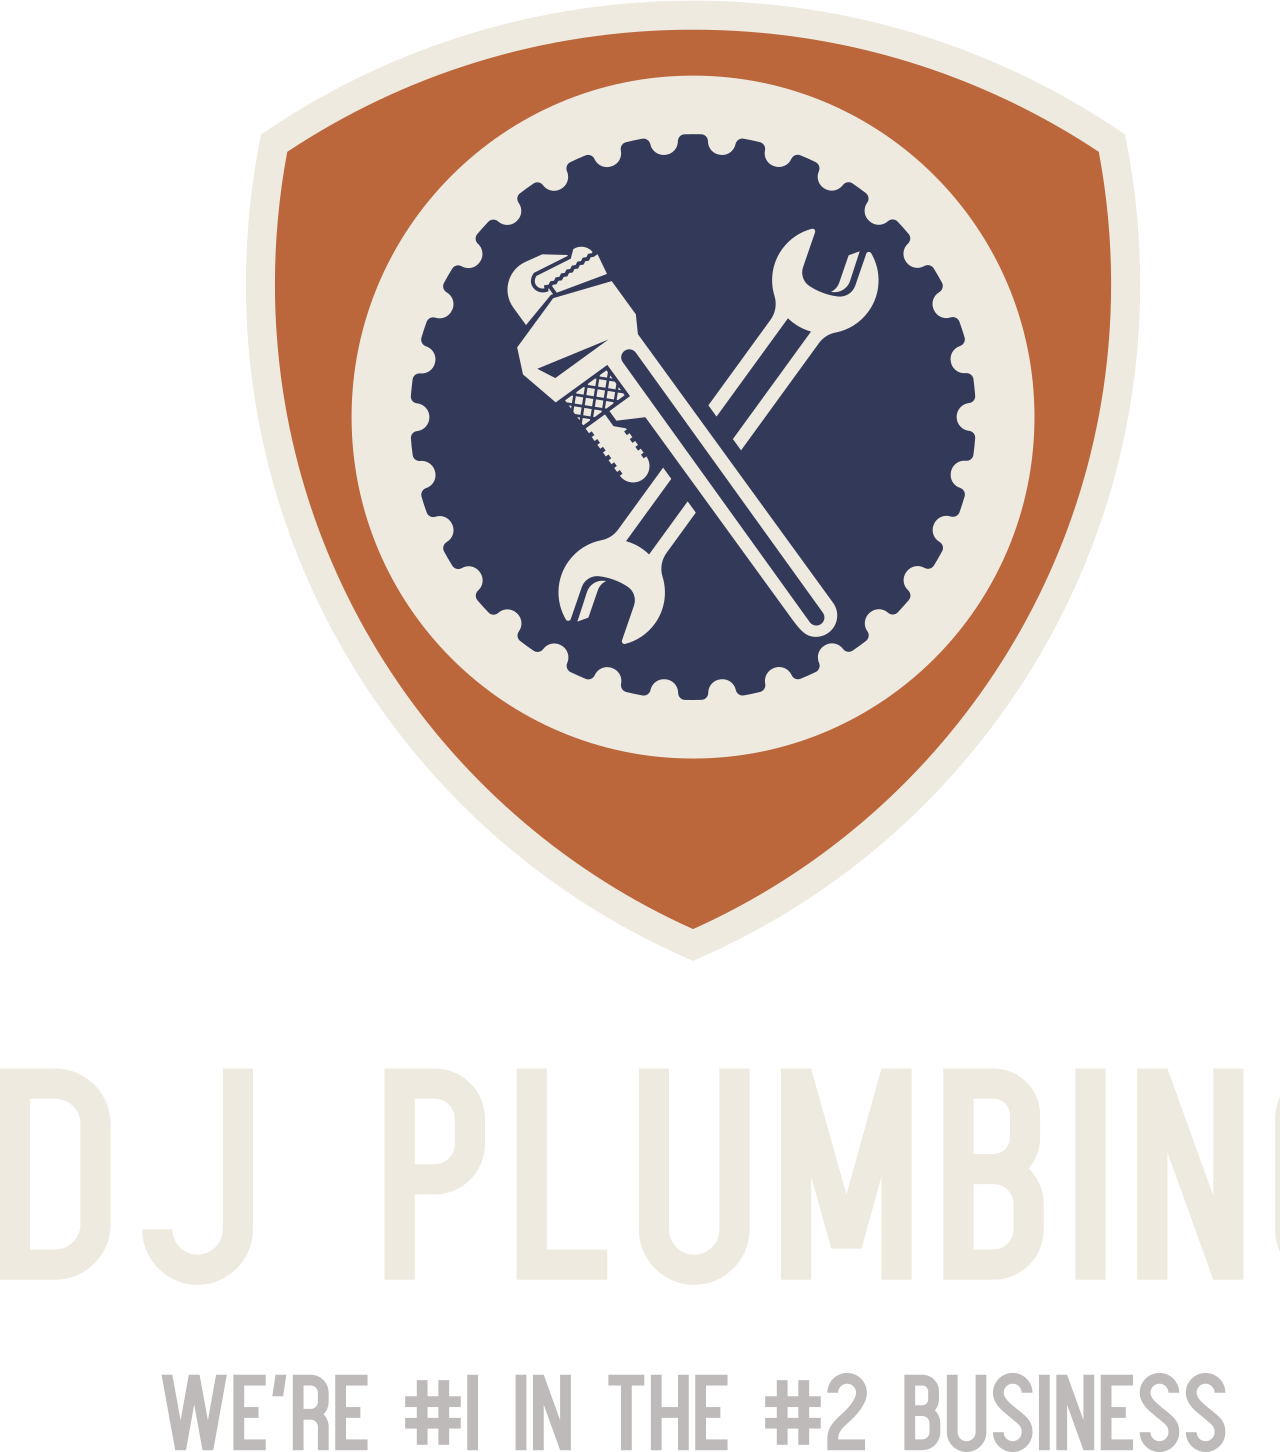 DJ Plumbing's web page